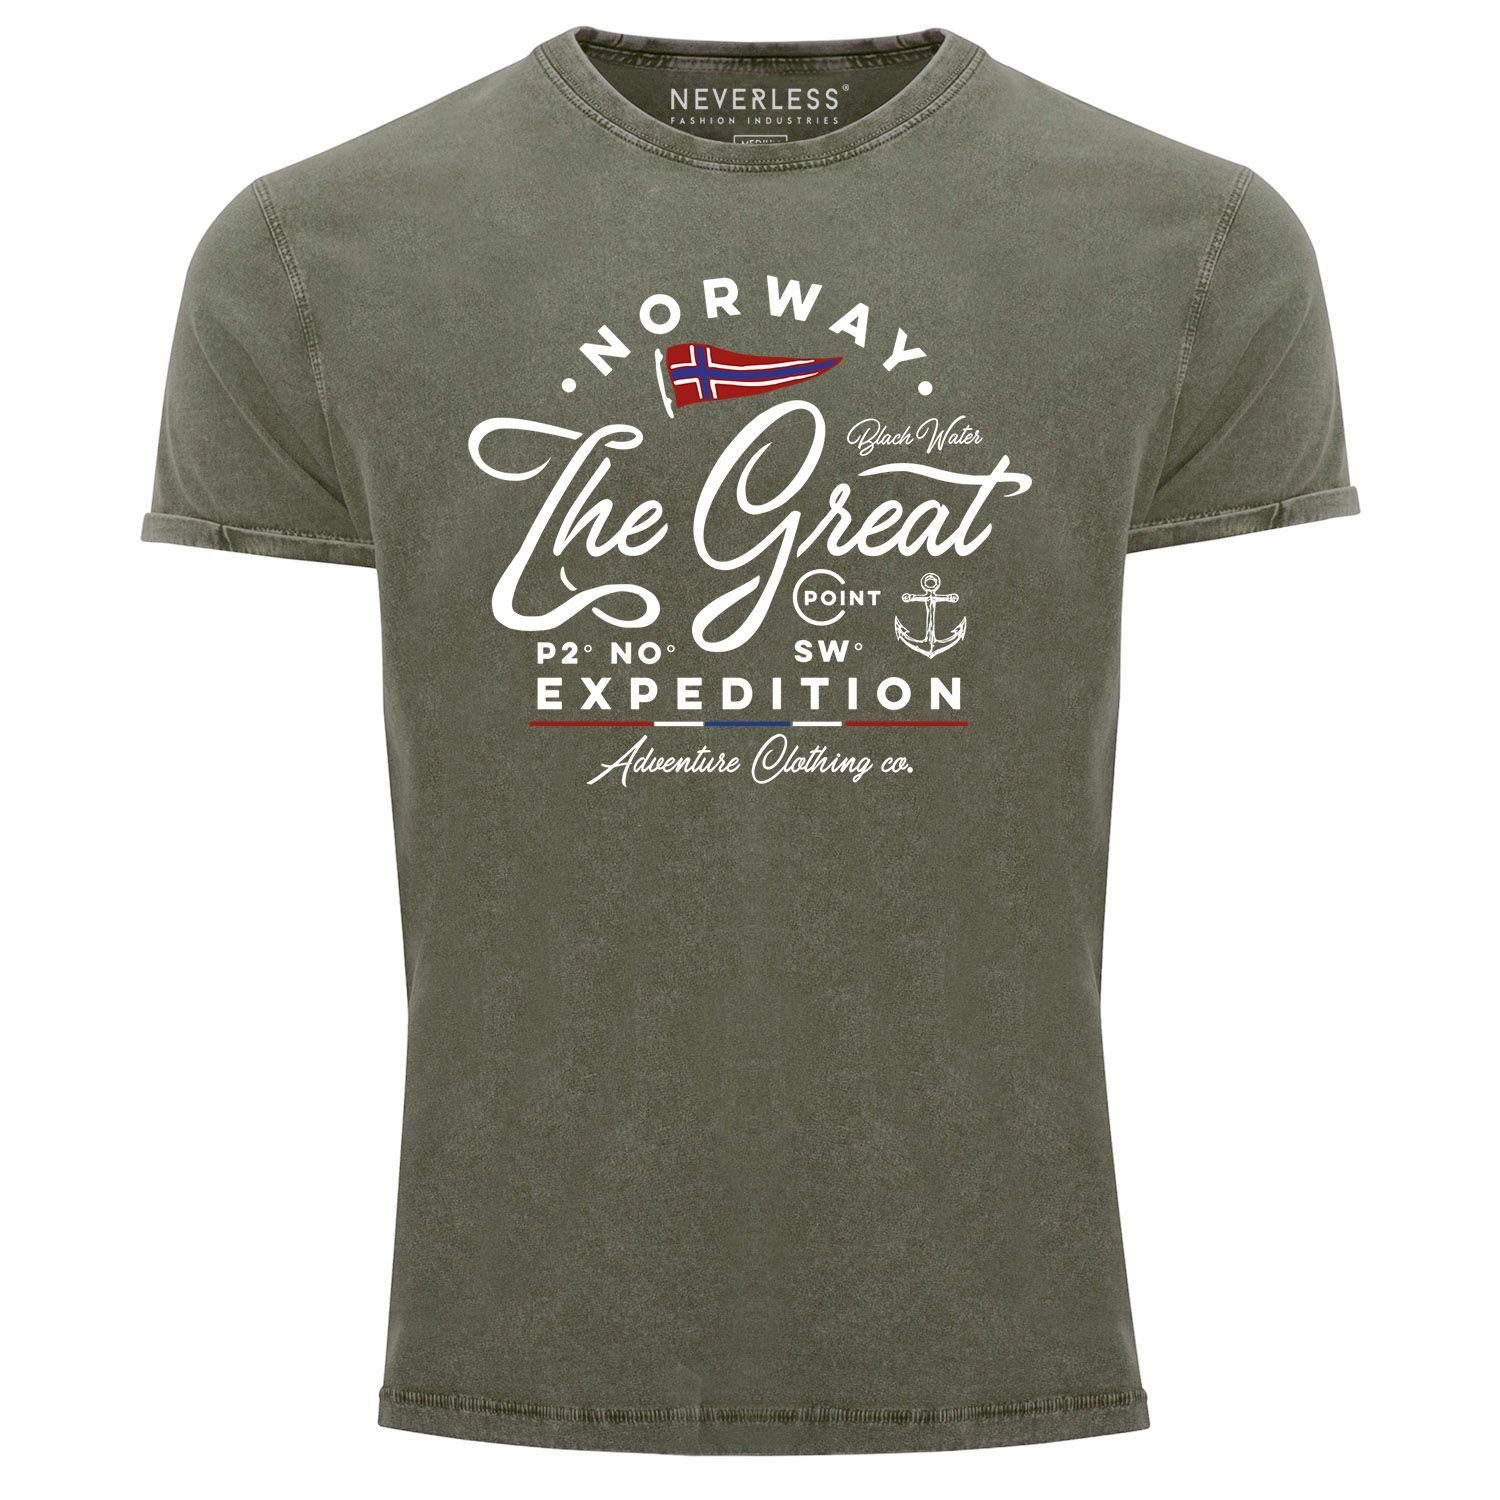 Aufdruck Neverless® oliv The Print mit Great Print-Shirt Look Expedition Outdoor Herren Norwegen Shirt Printshirt T-Shirt Vintage Adventure Neverless Used